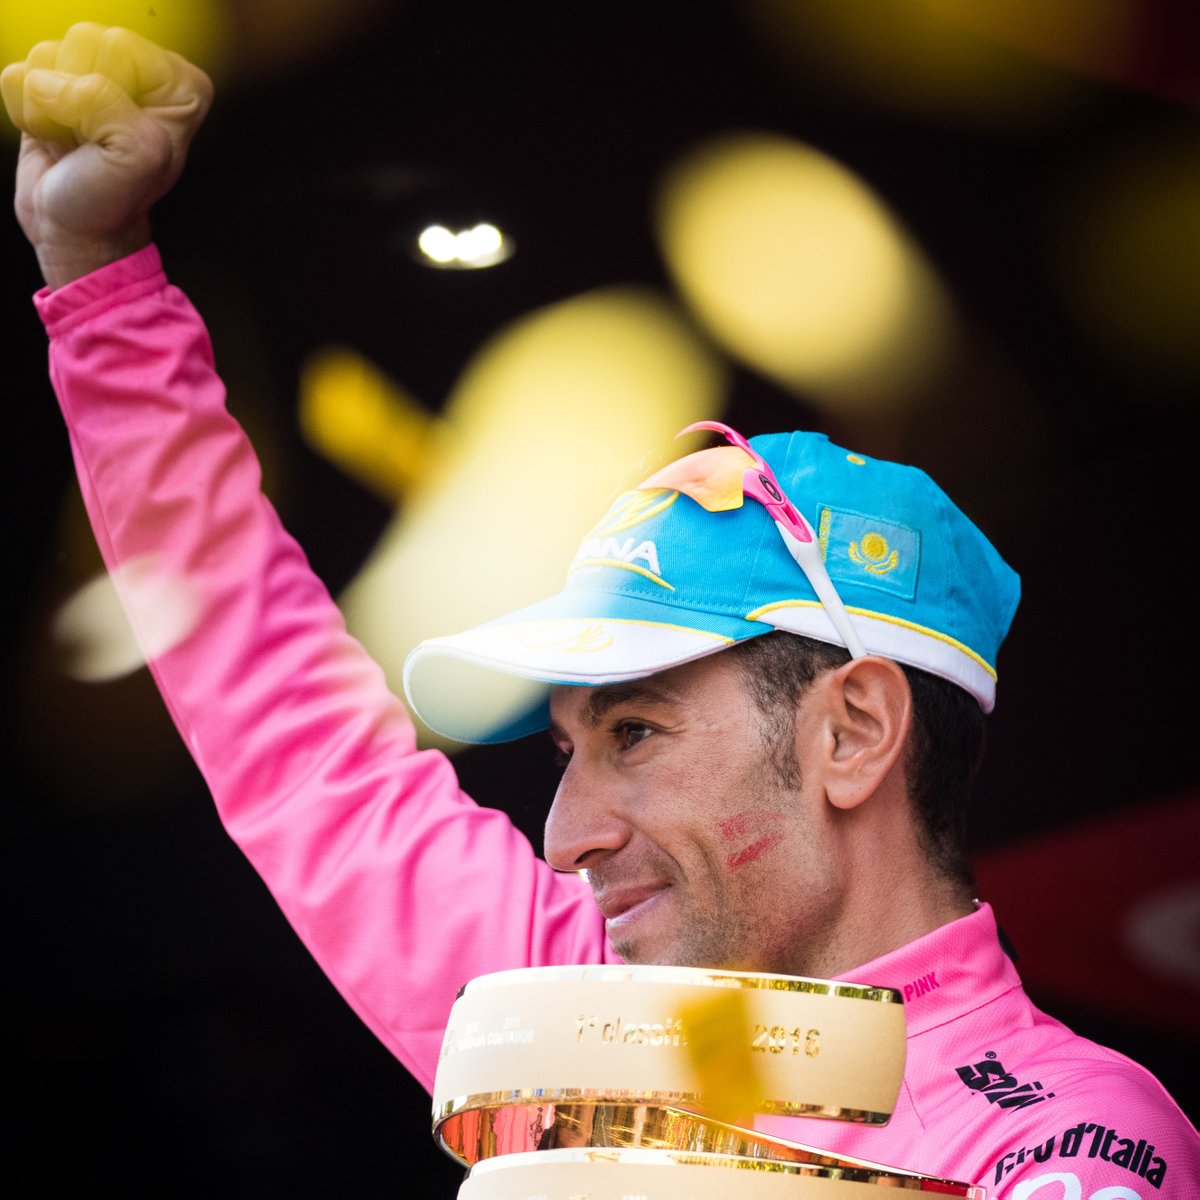 🎂 Happy Birthday, Vincenzo! 
.
🎂 Buon Compleanno @vincenzonibali!

#Giro